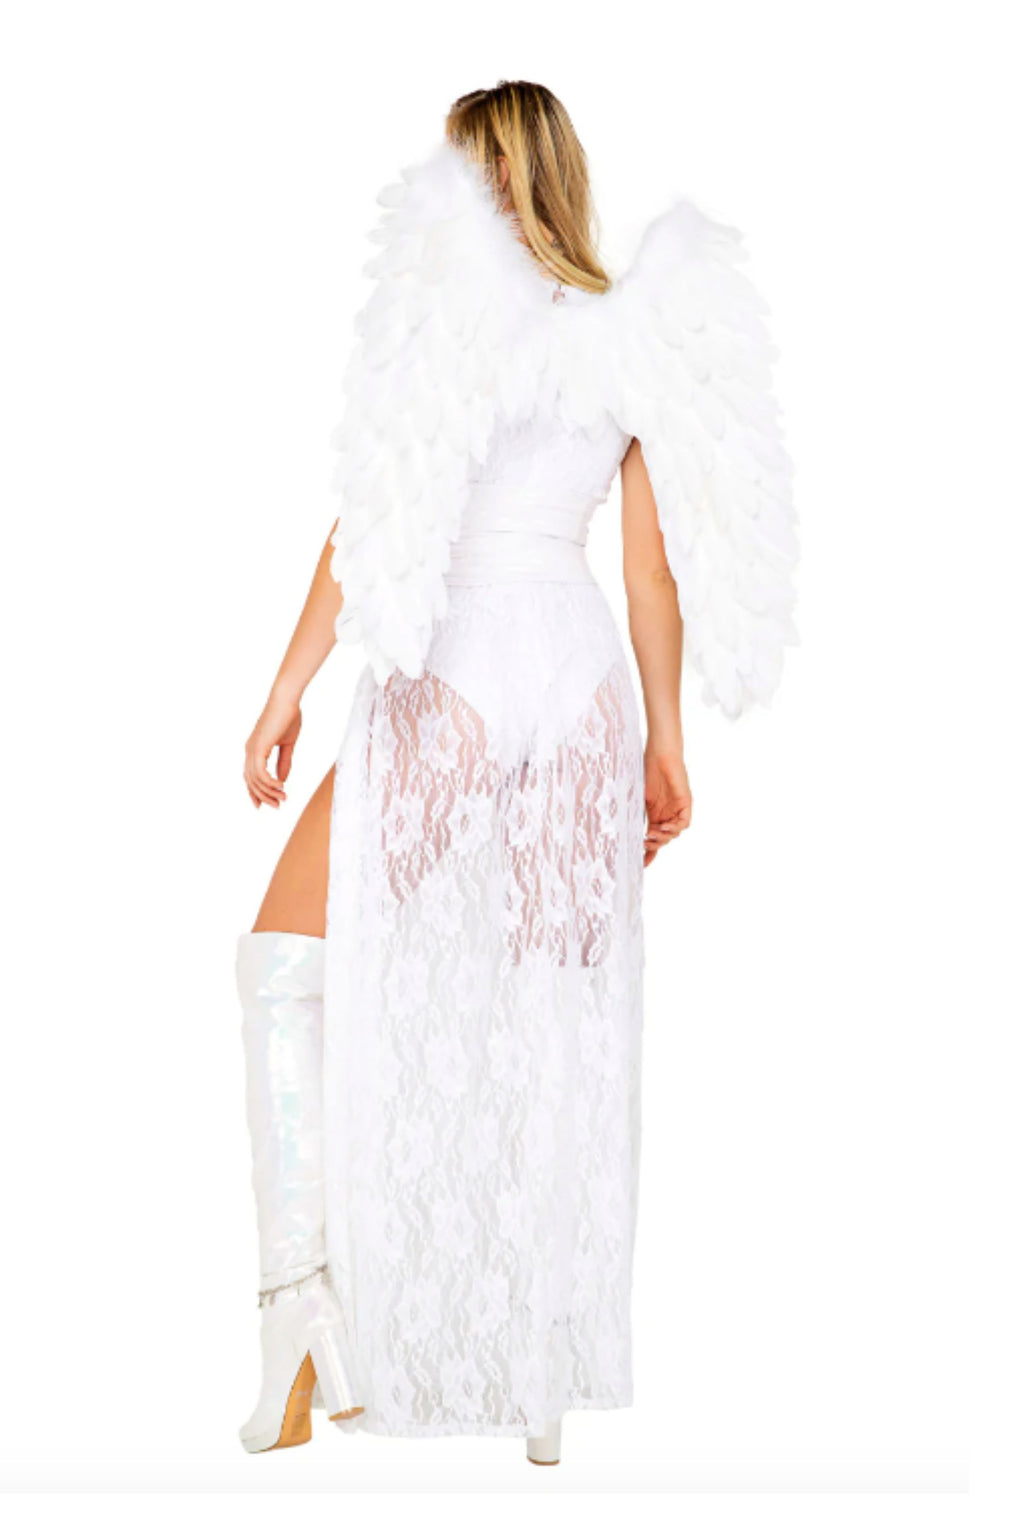 Heavens Kiss Angel Costume